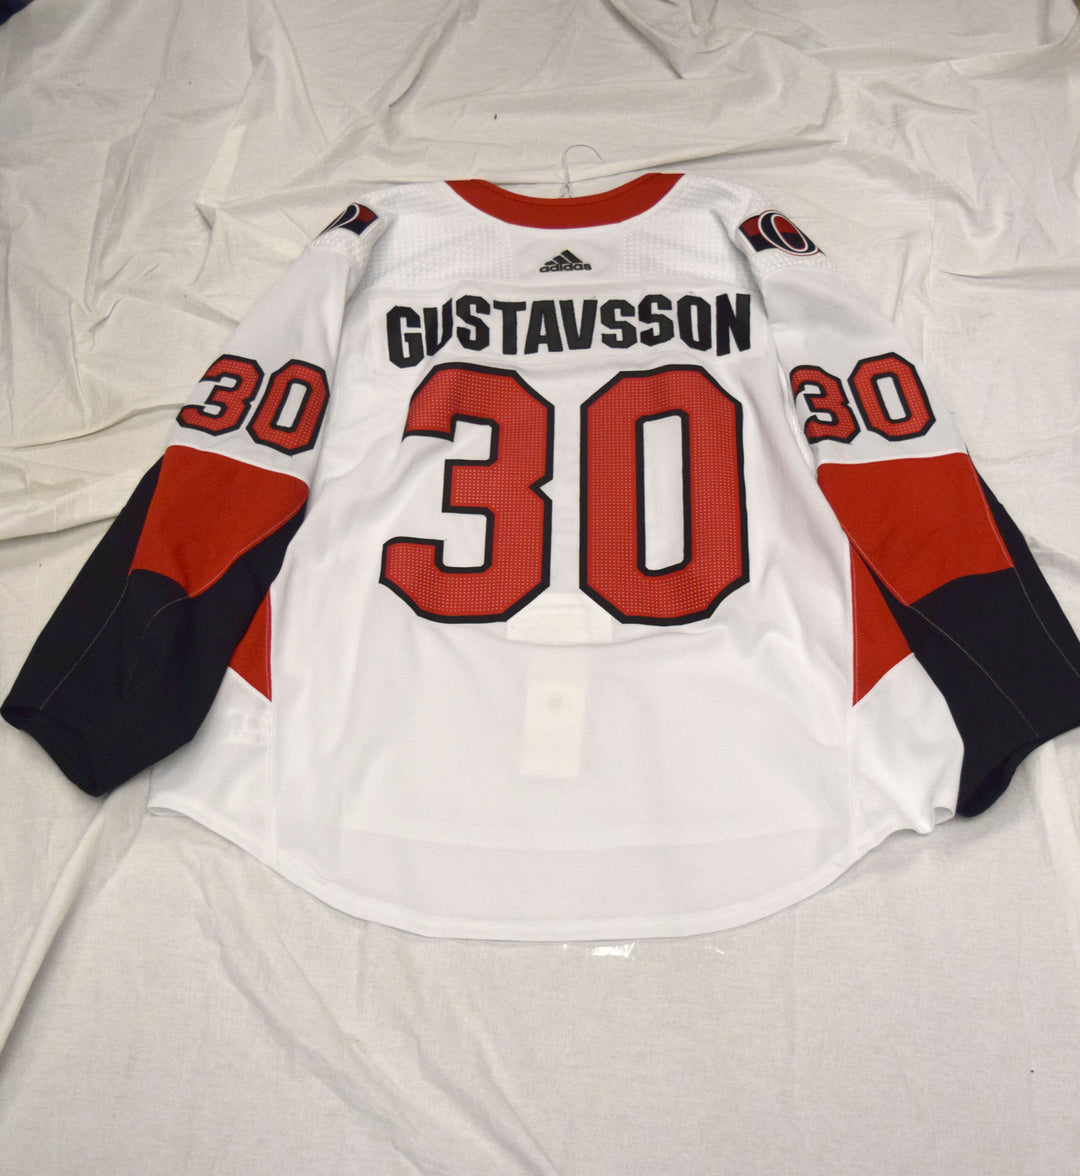 19/20 Away Set 1 - Gustavsson